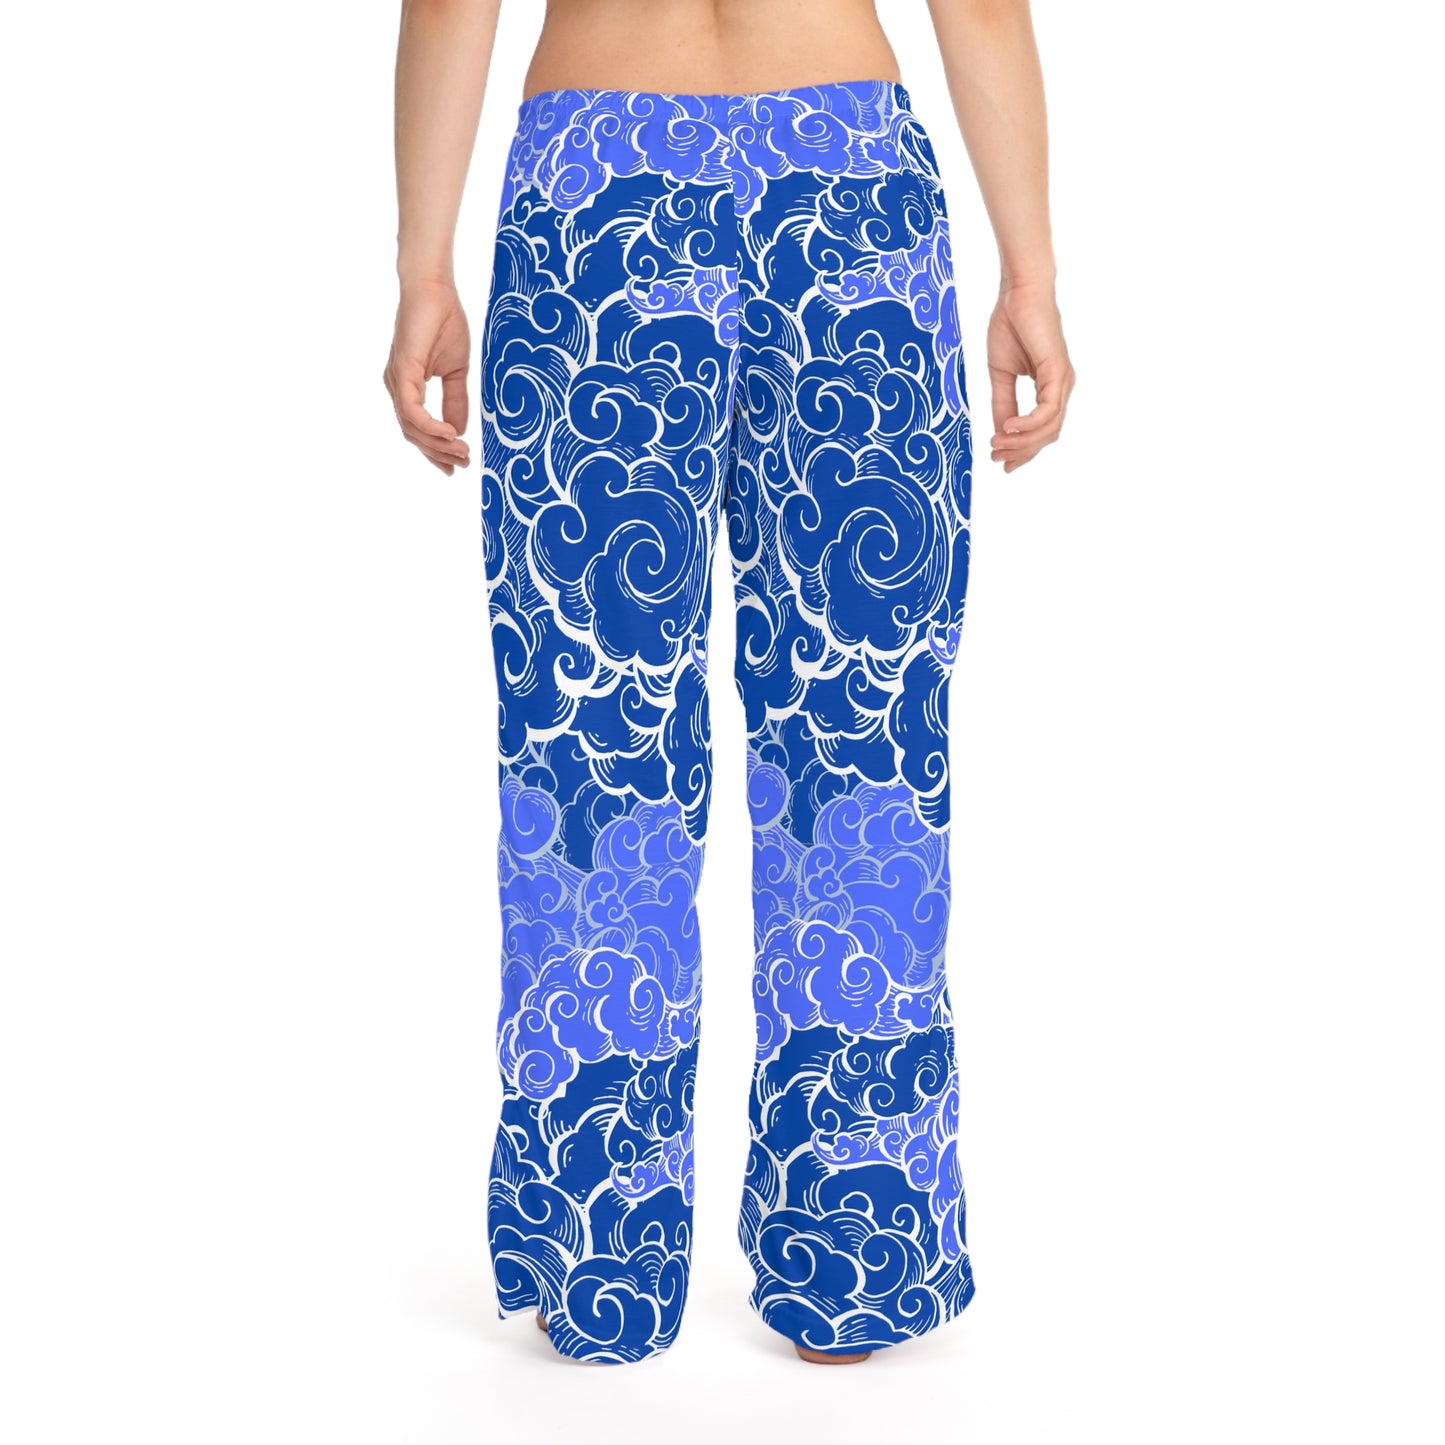 Limited Edition "Wabi-Sabi" Pajama Pants